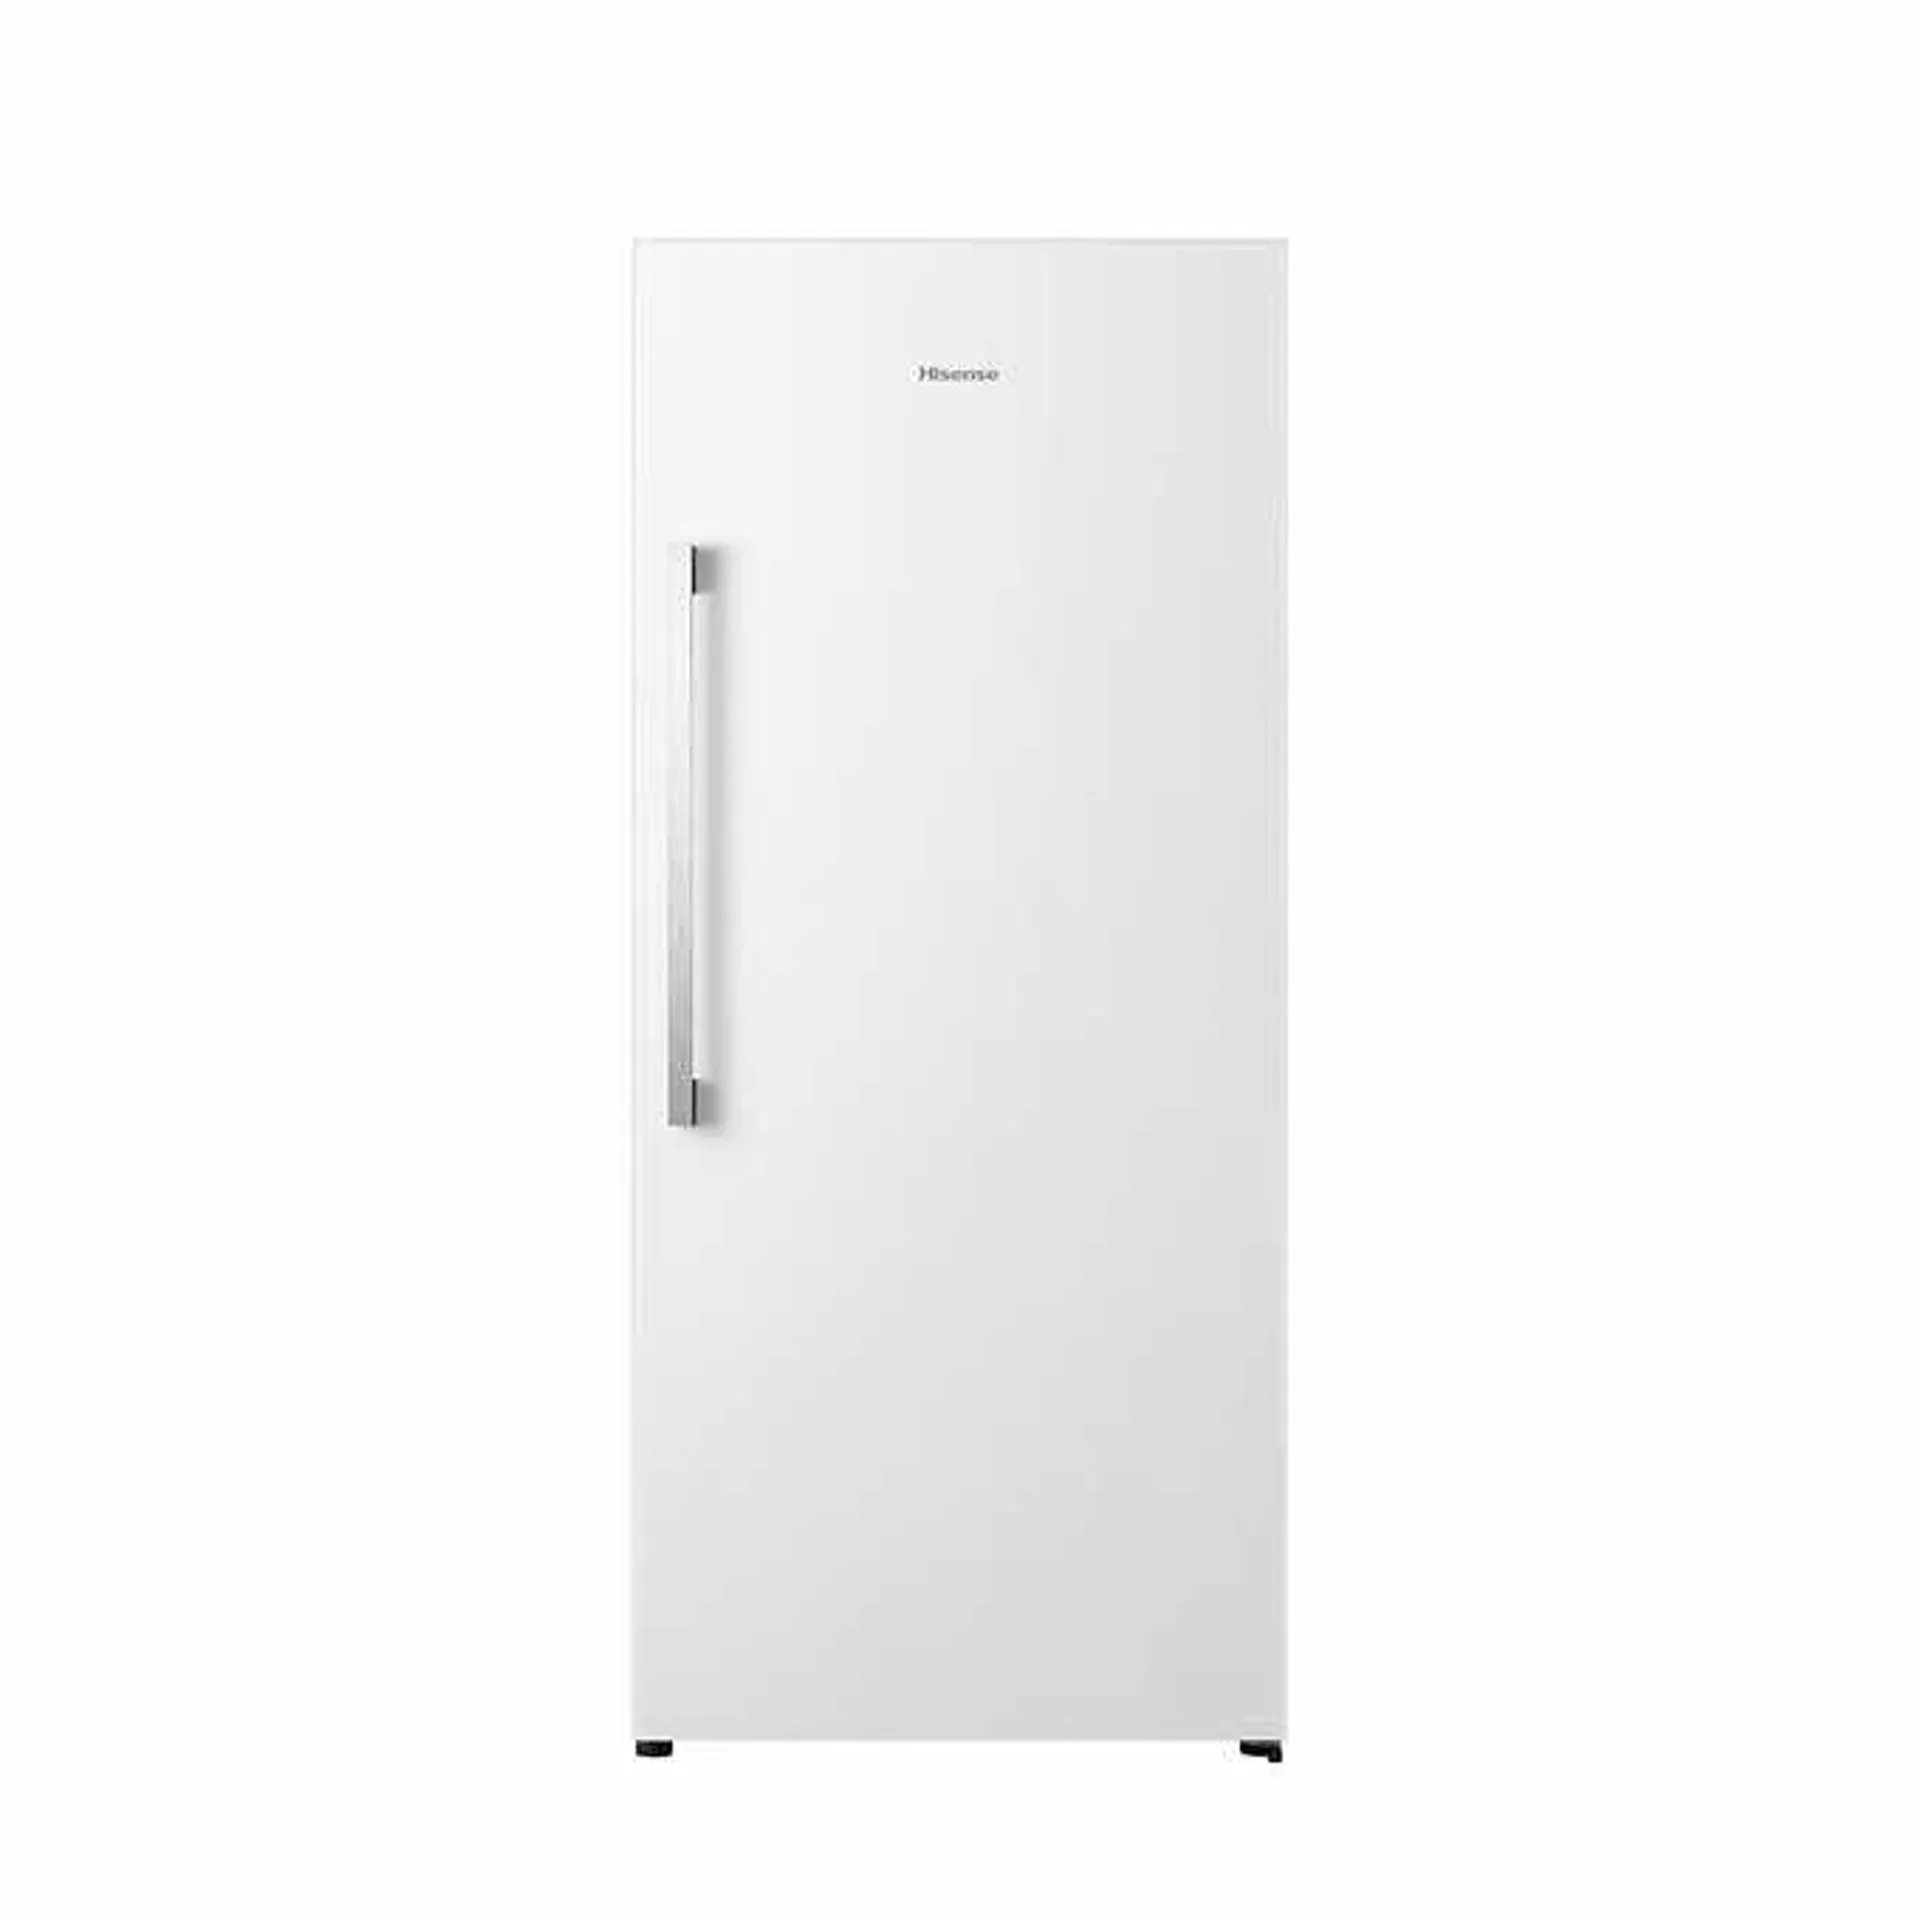 Hisense 21.2 cu ft. White Convertible Upright Fridge or Freezer with Reversible Door